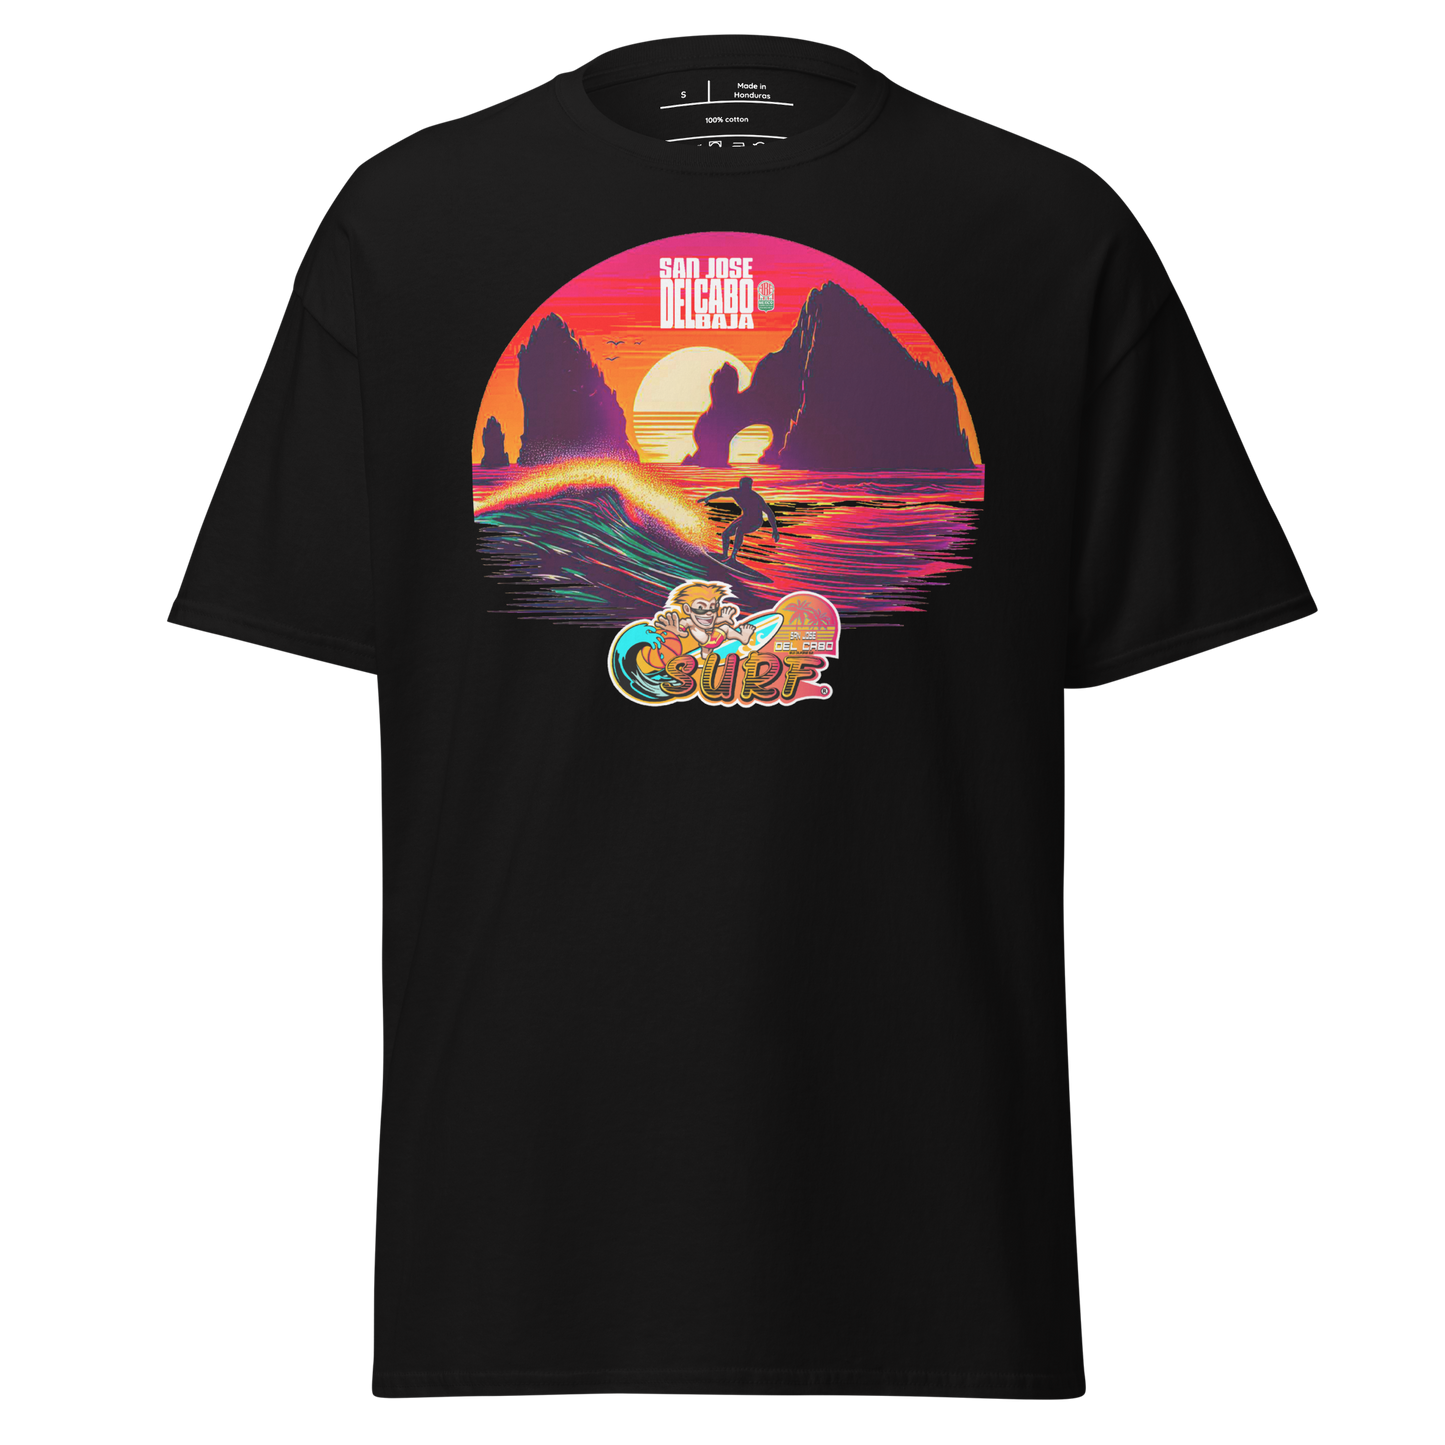 "Sunset Surf of San Jose del Cabo" T-shirt